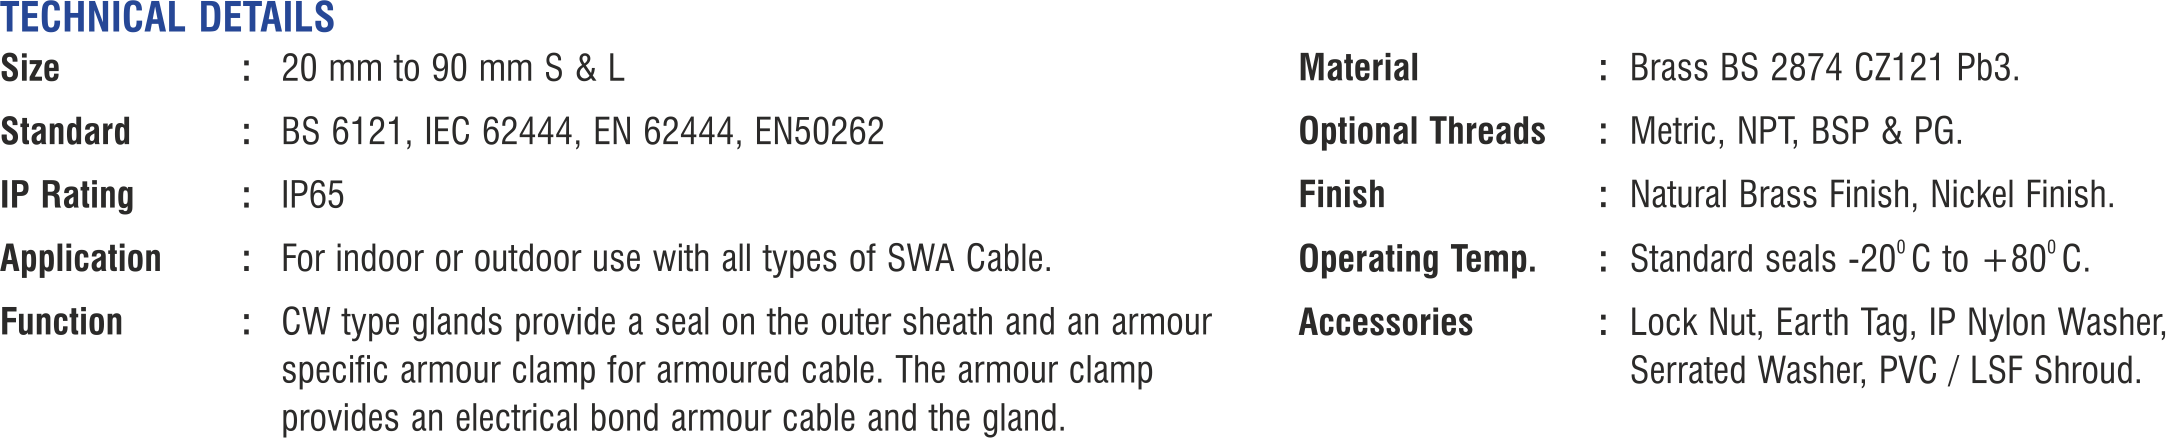 Atlas-A4-Certify-Cable-Gland-2018-QQ-cw-4-pt-type-cable-glands2